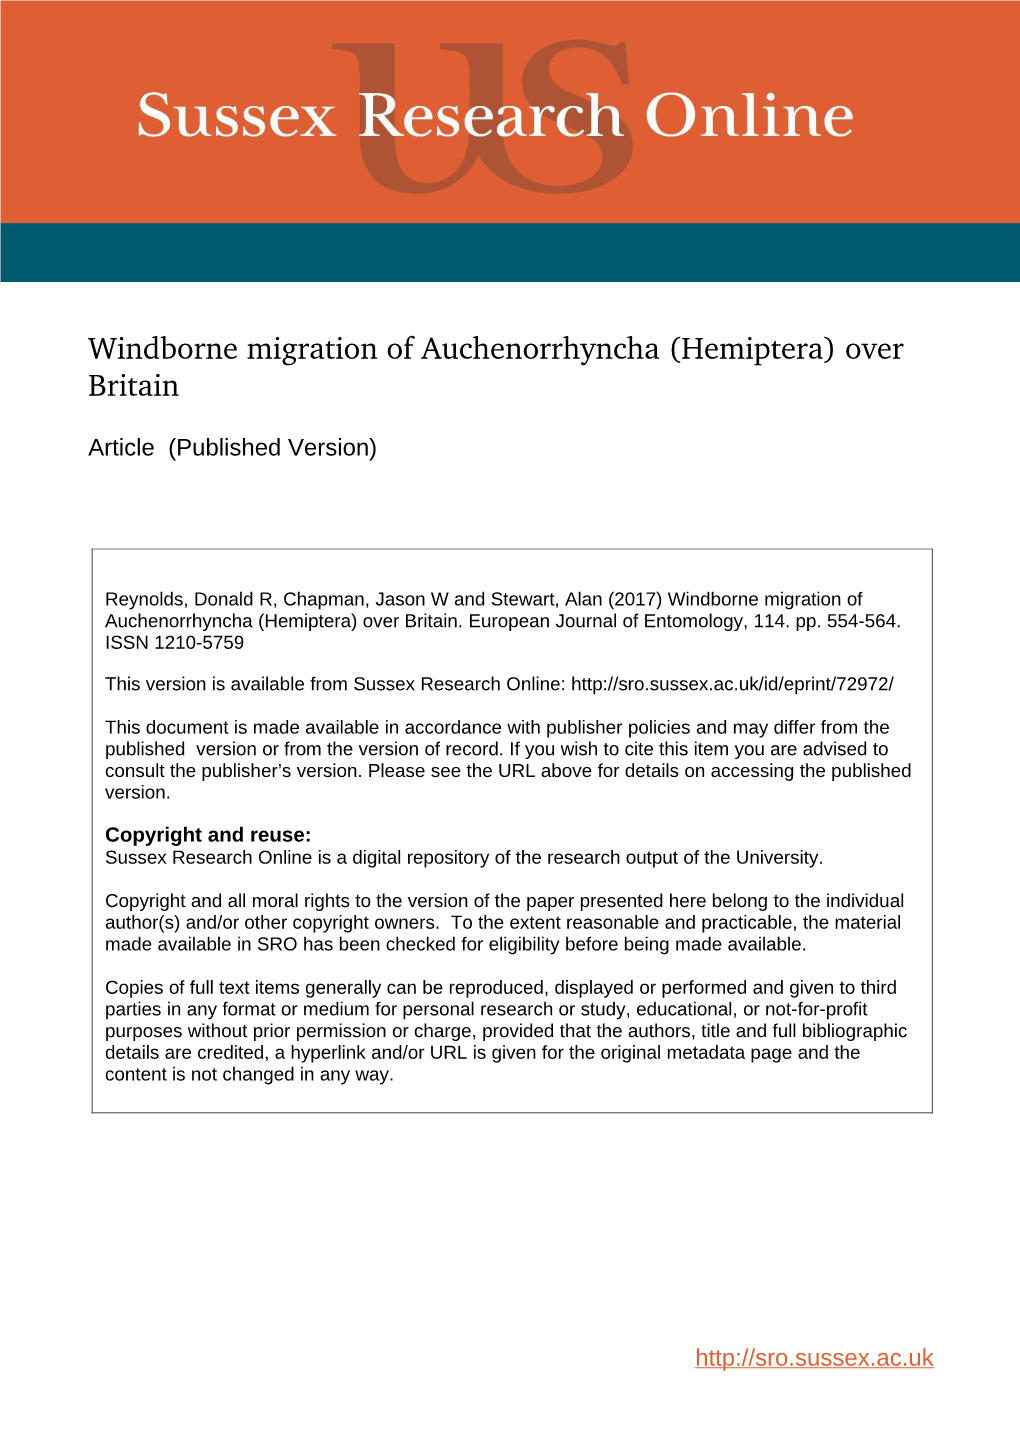 Windborne Migration of Auchenorrhyncha (Hemiptera) Over Britain